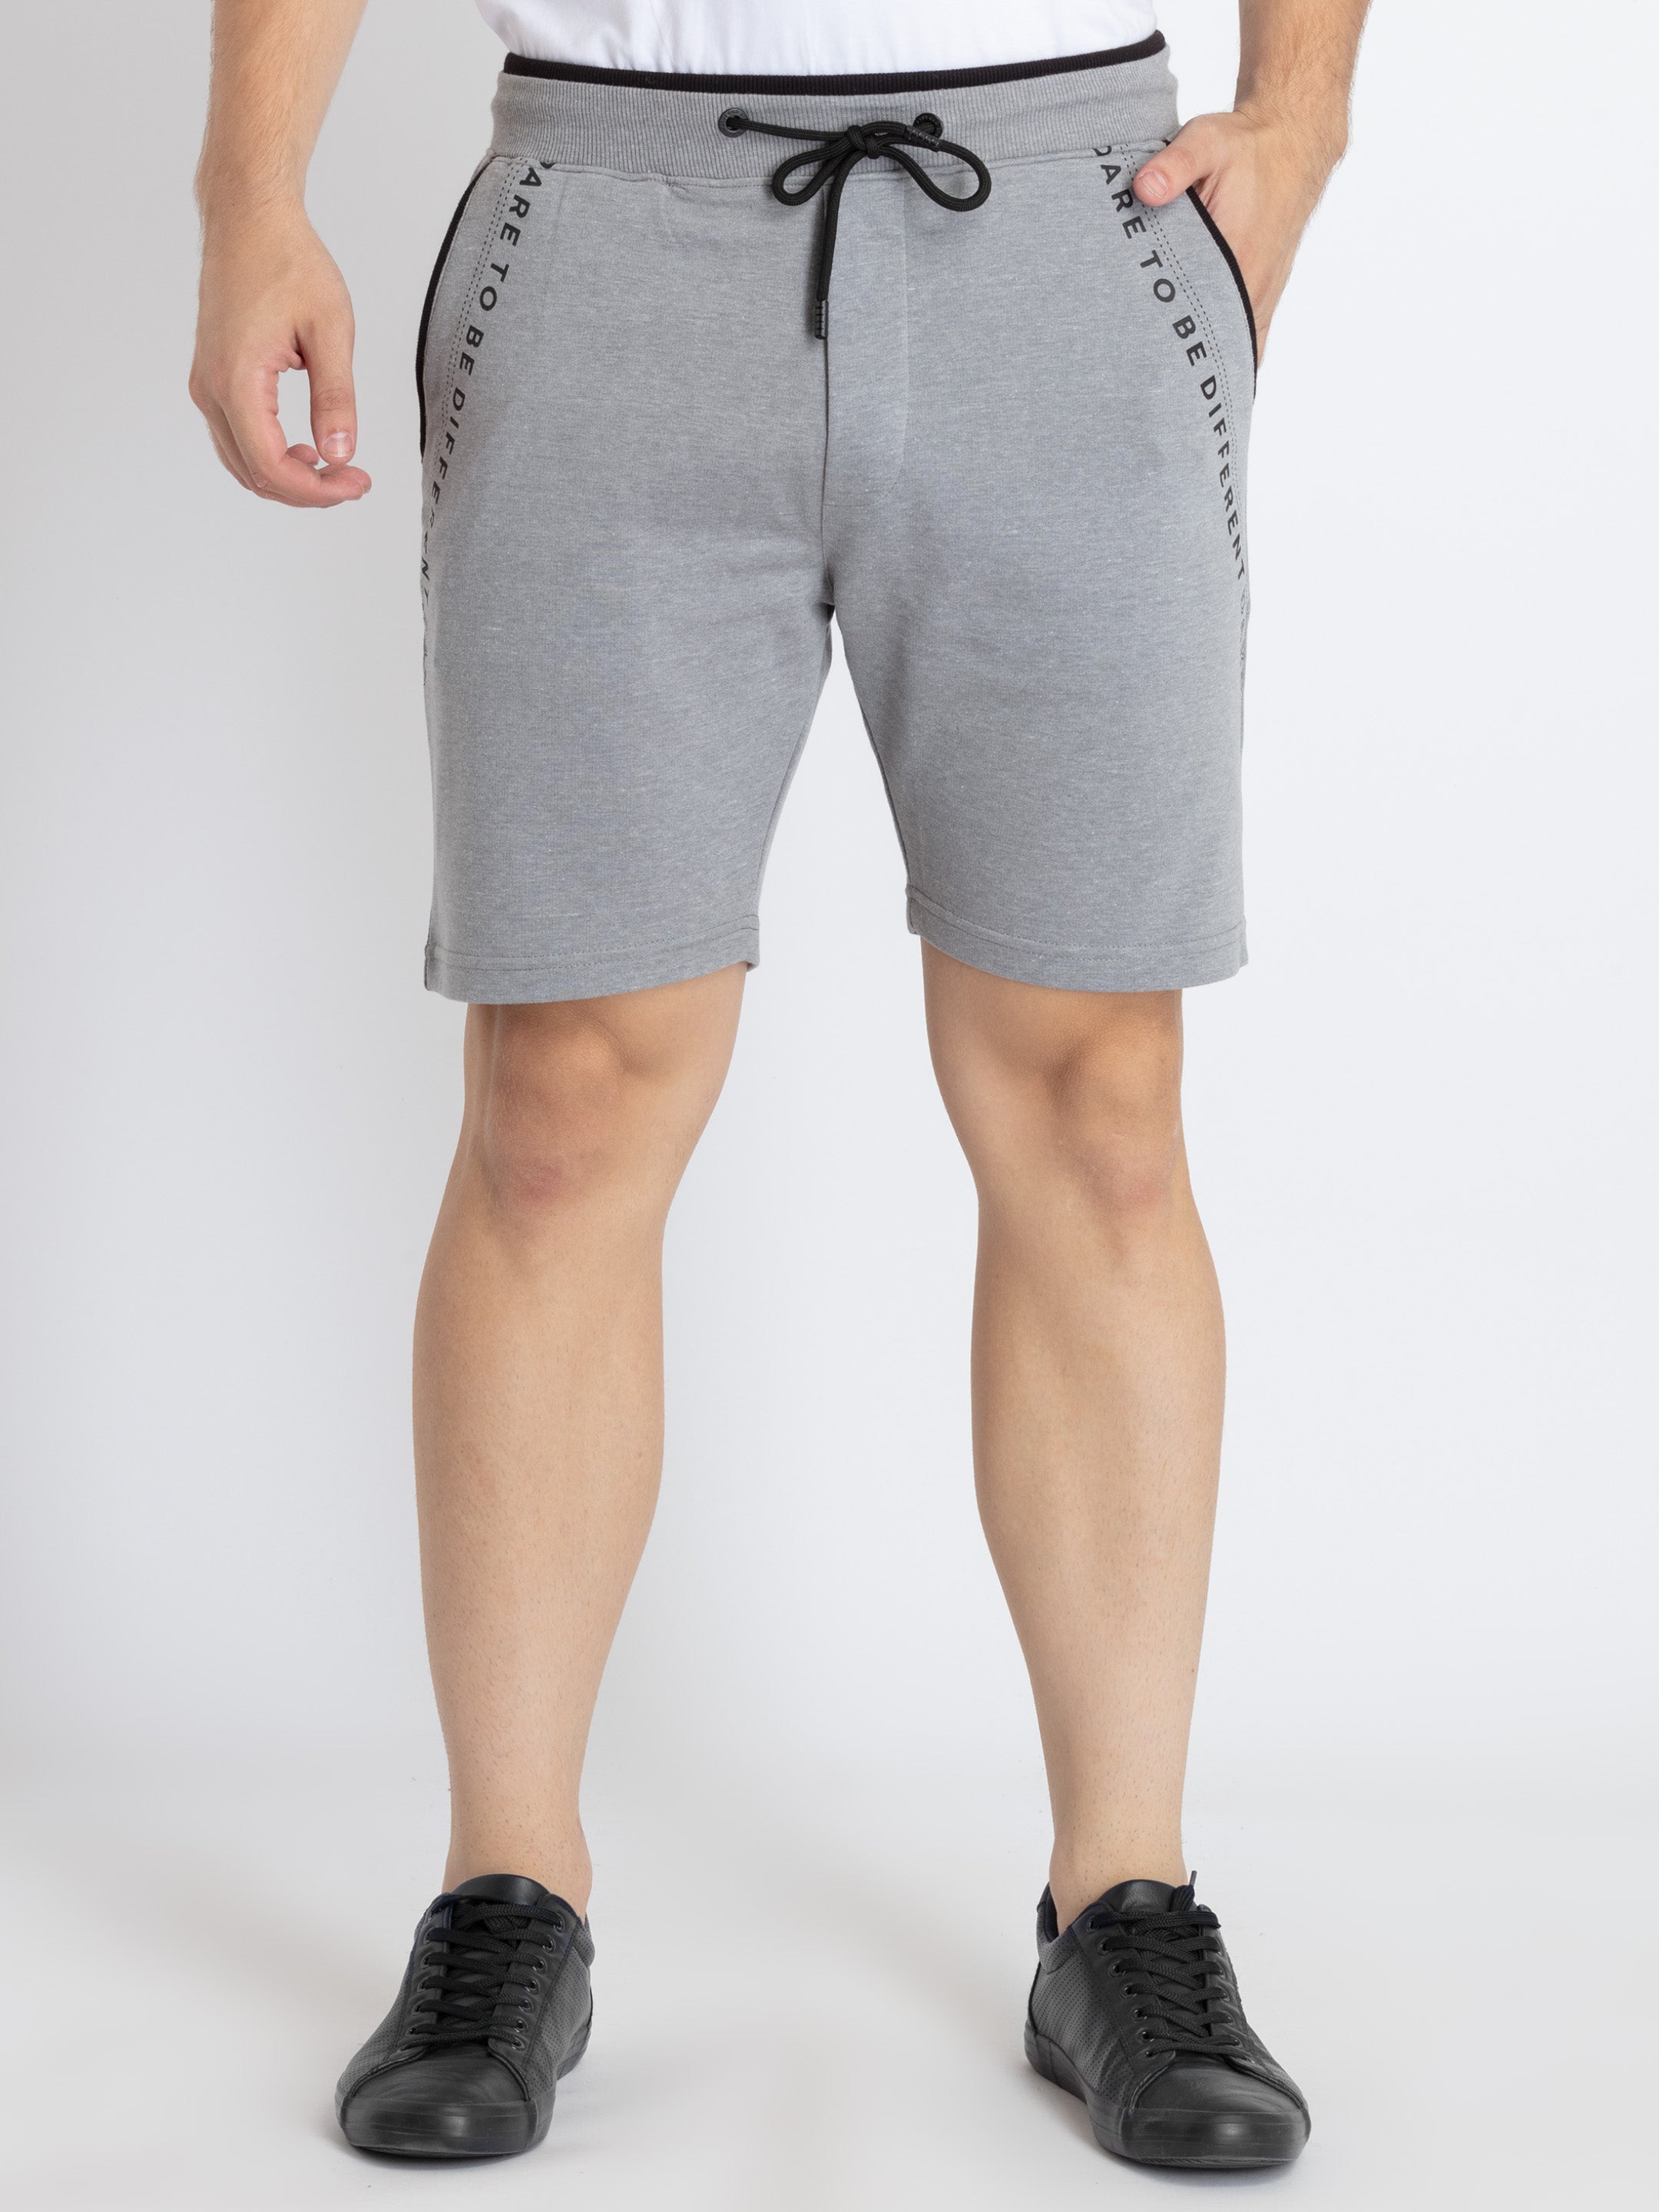 Status Quo |Men's Shorts - S, M, L, XL, XXL